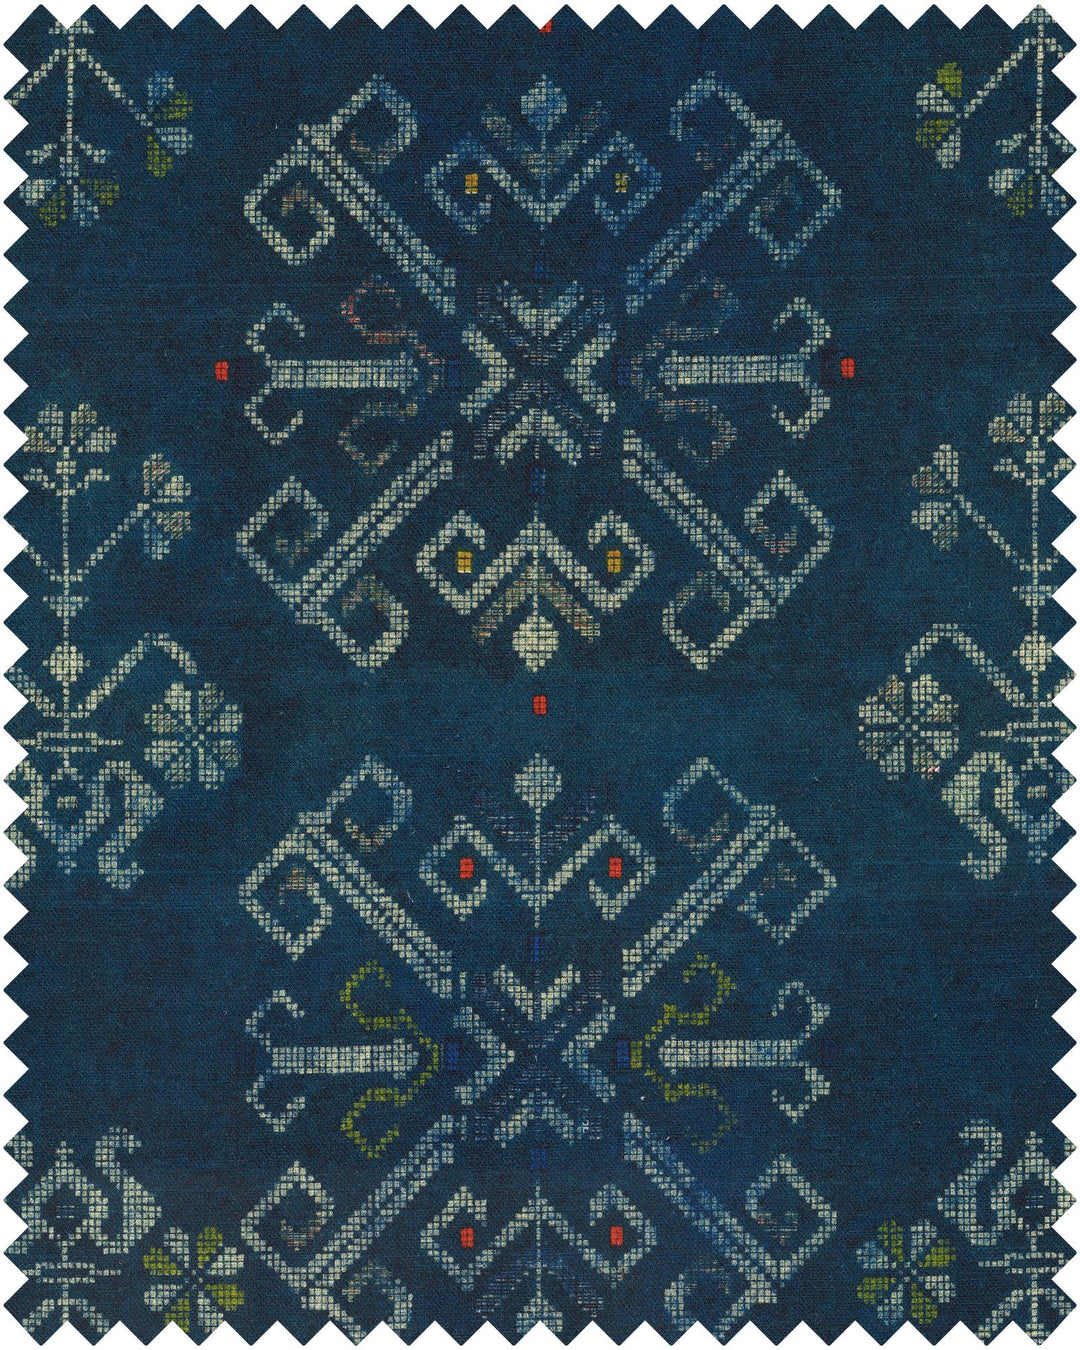 linen-roots-transylvanian-weave-fabric-navy-blue-red-green-folk-design